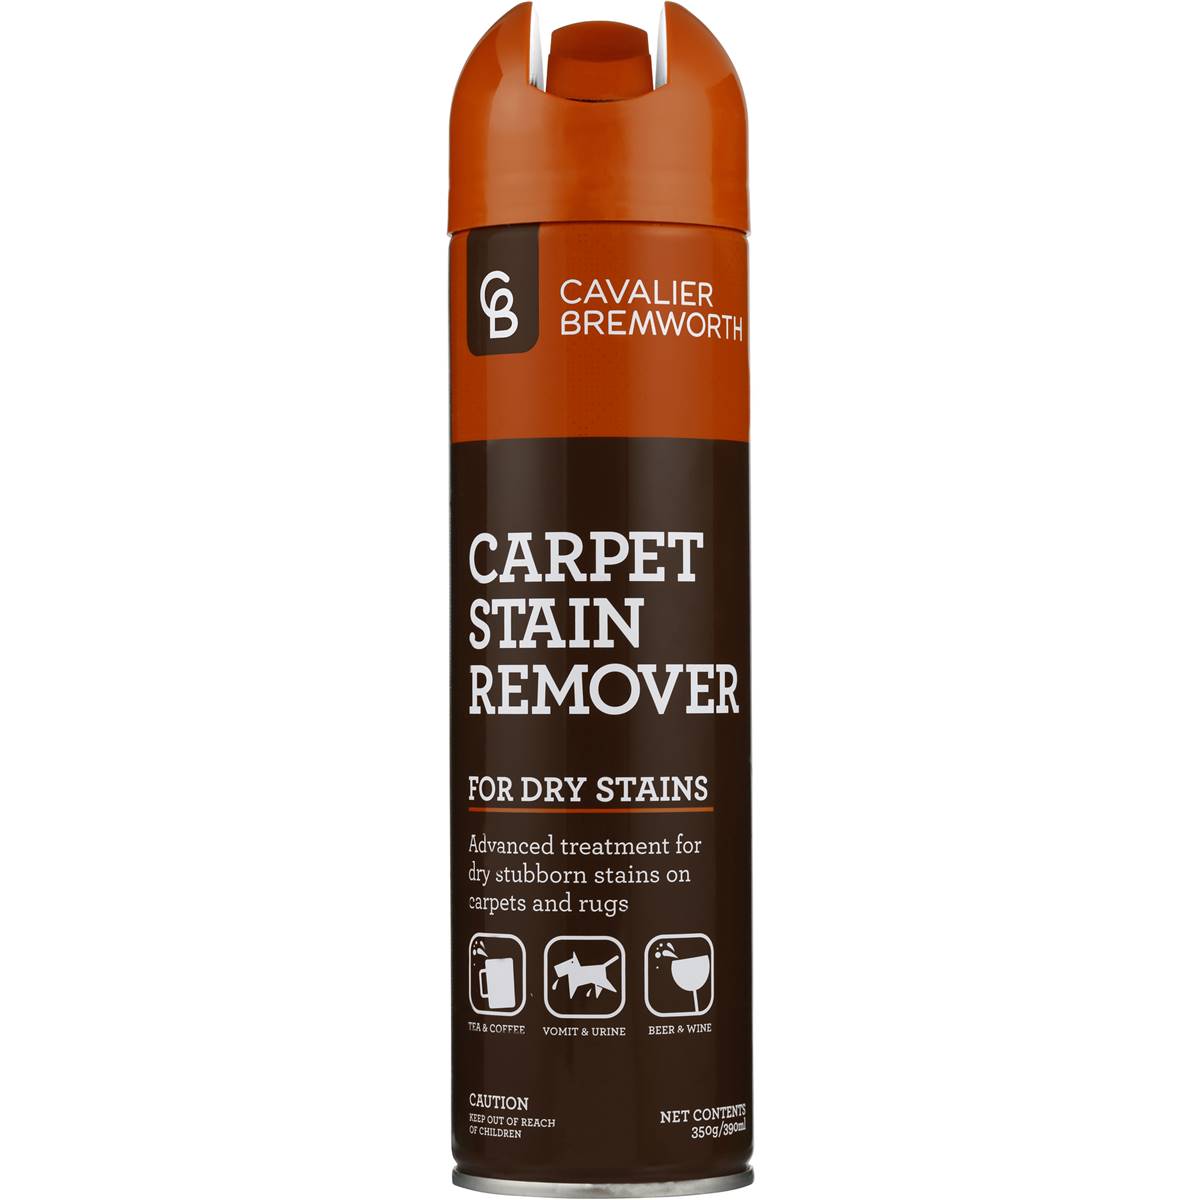 Cavalier Bremworth Carpet Stain Remover 350g